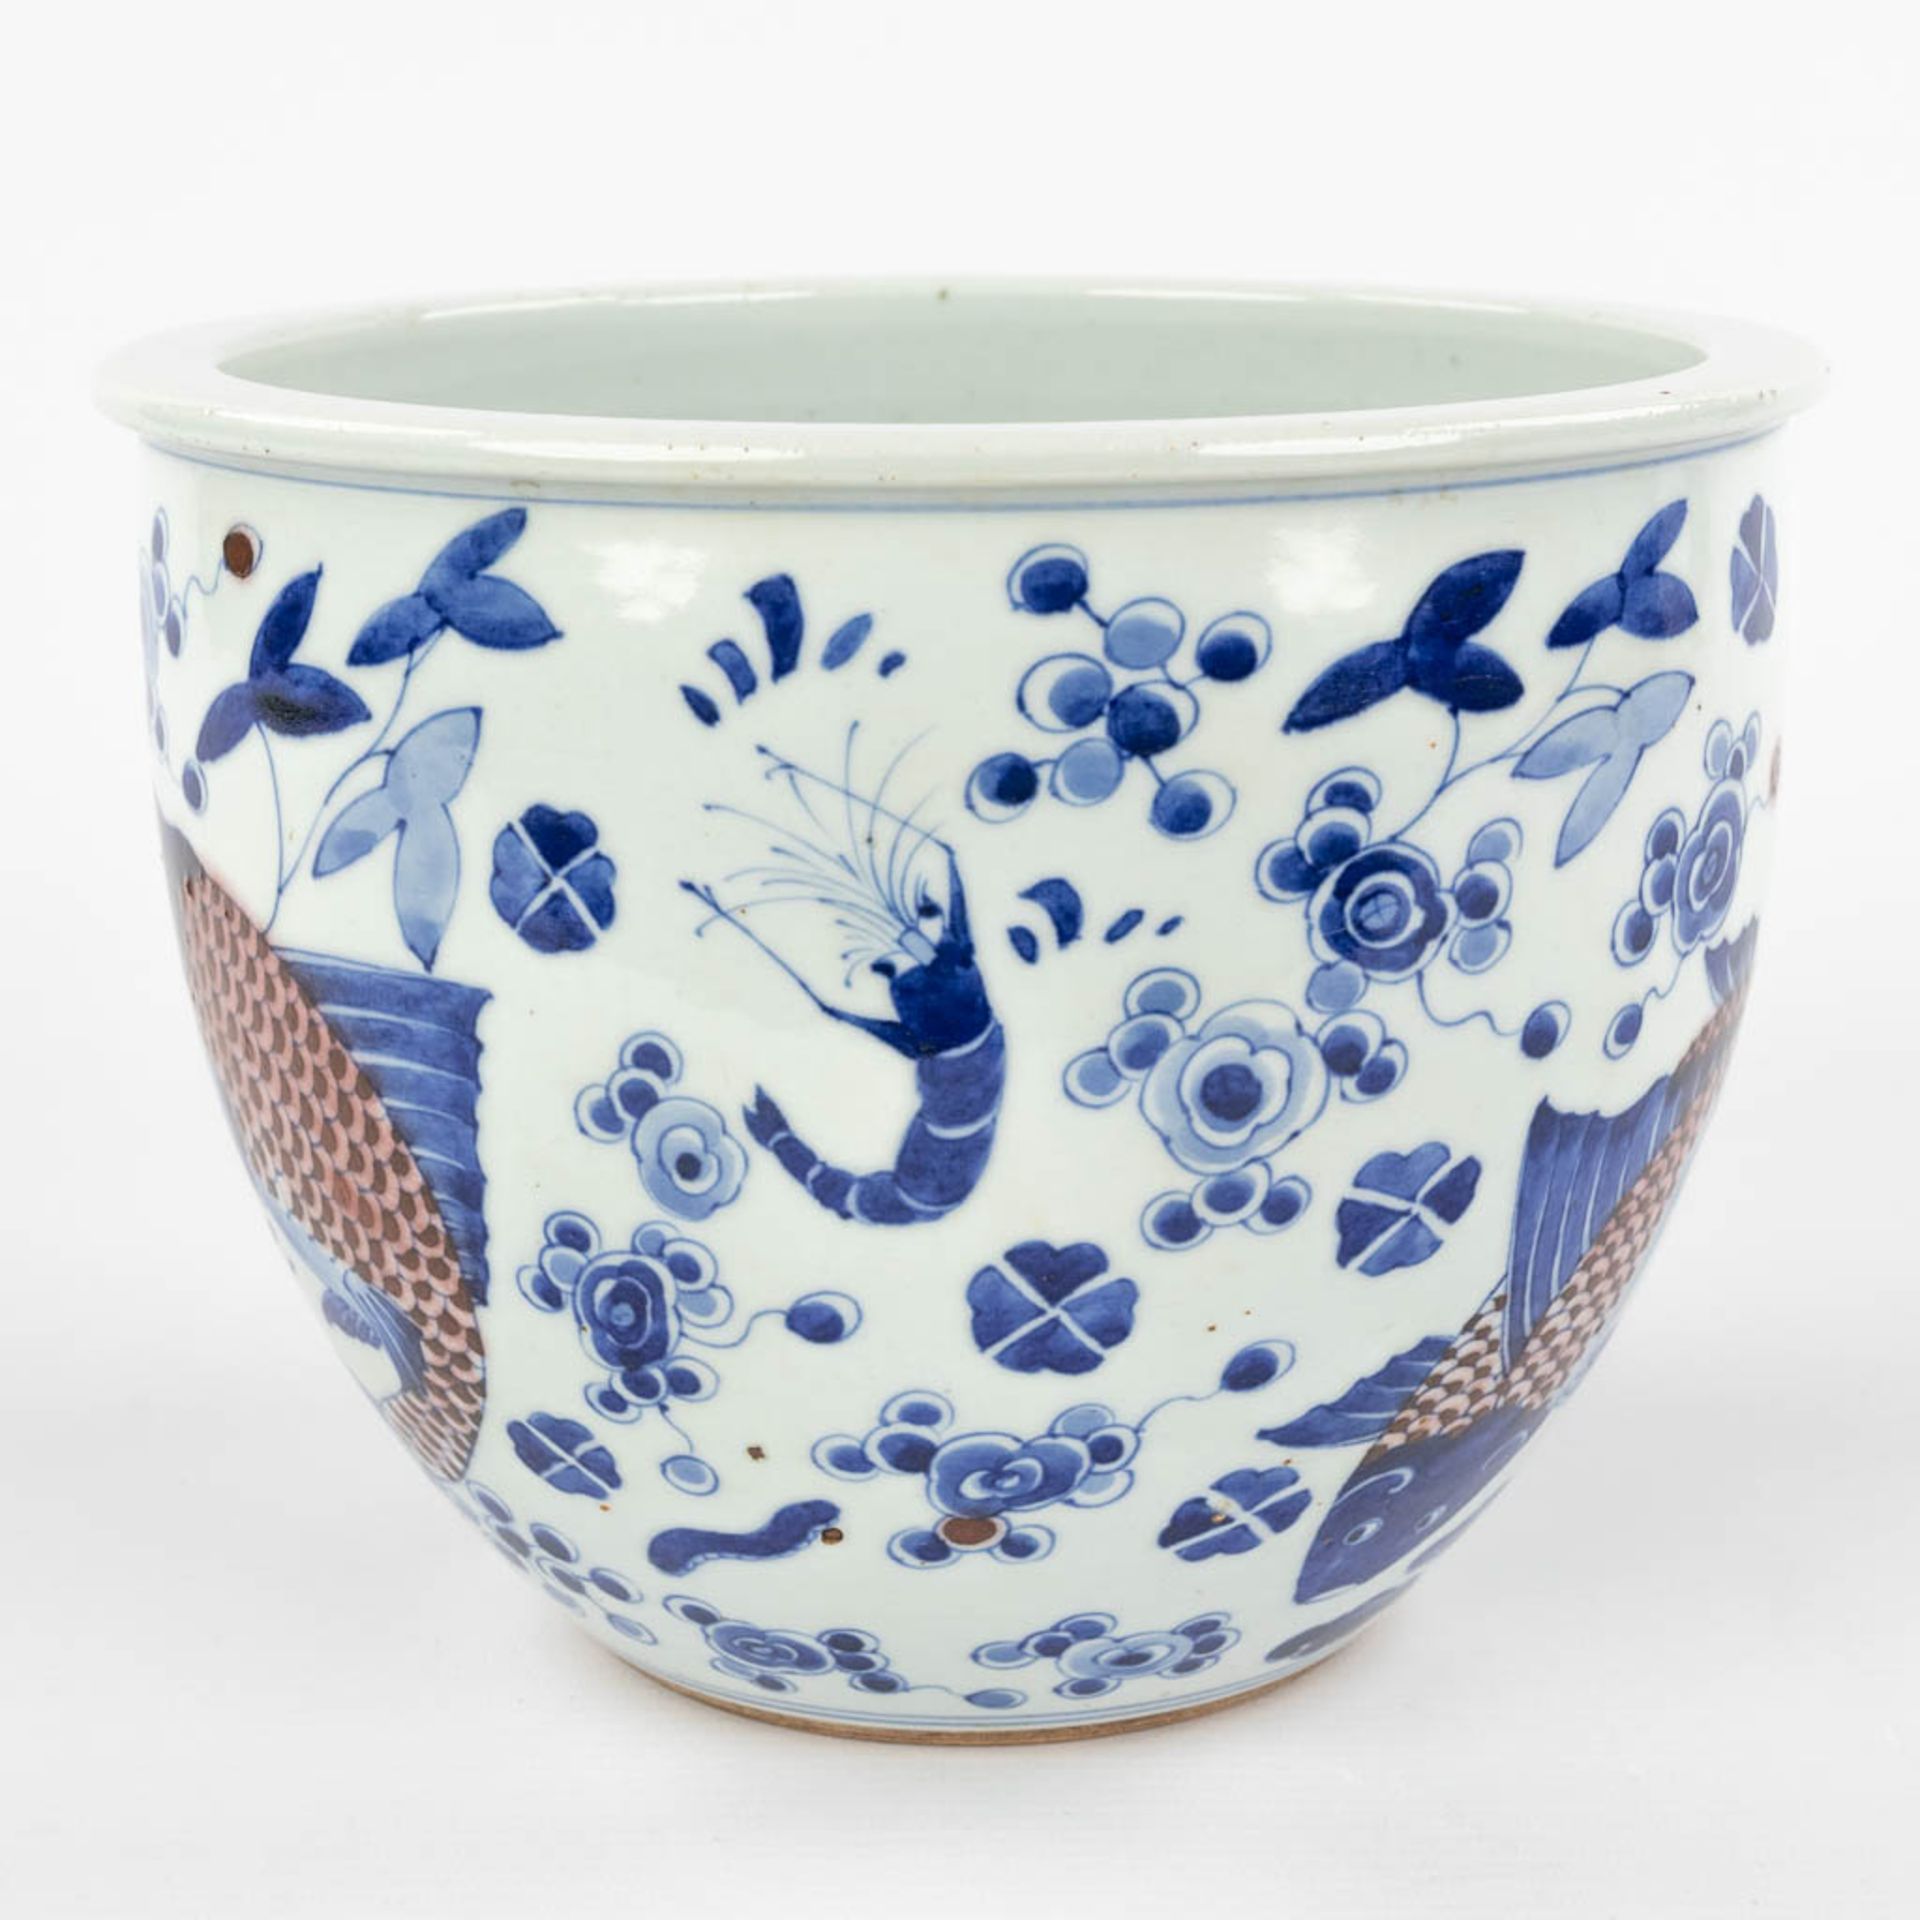 A large Chinese porcelain fish bowl, blue-white decor, 18th/19th C. (H:17 x D:22 cm) - Image 6 of 11